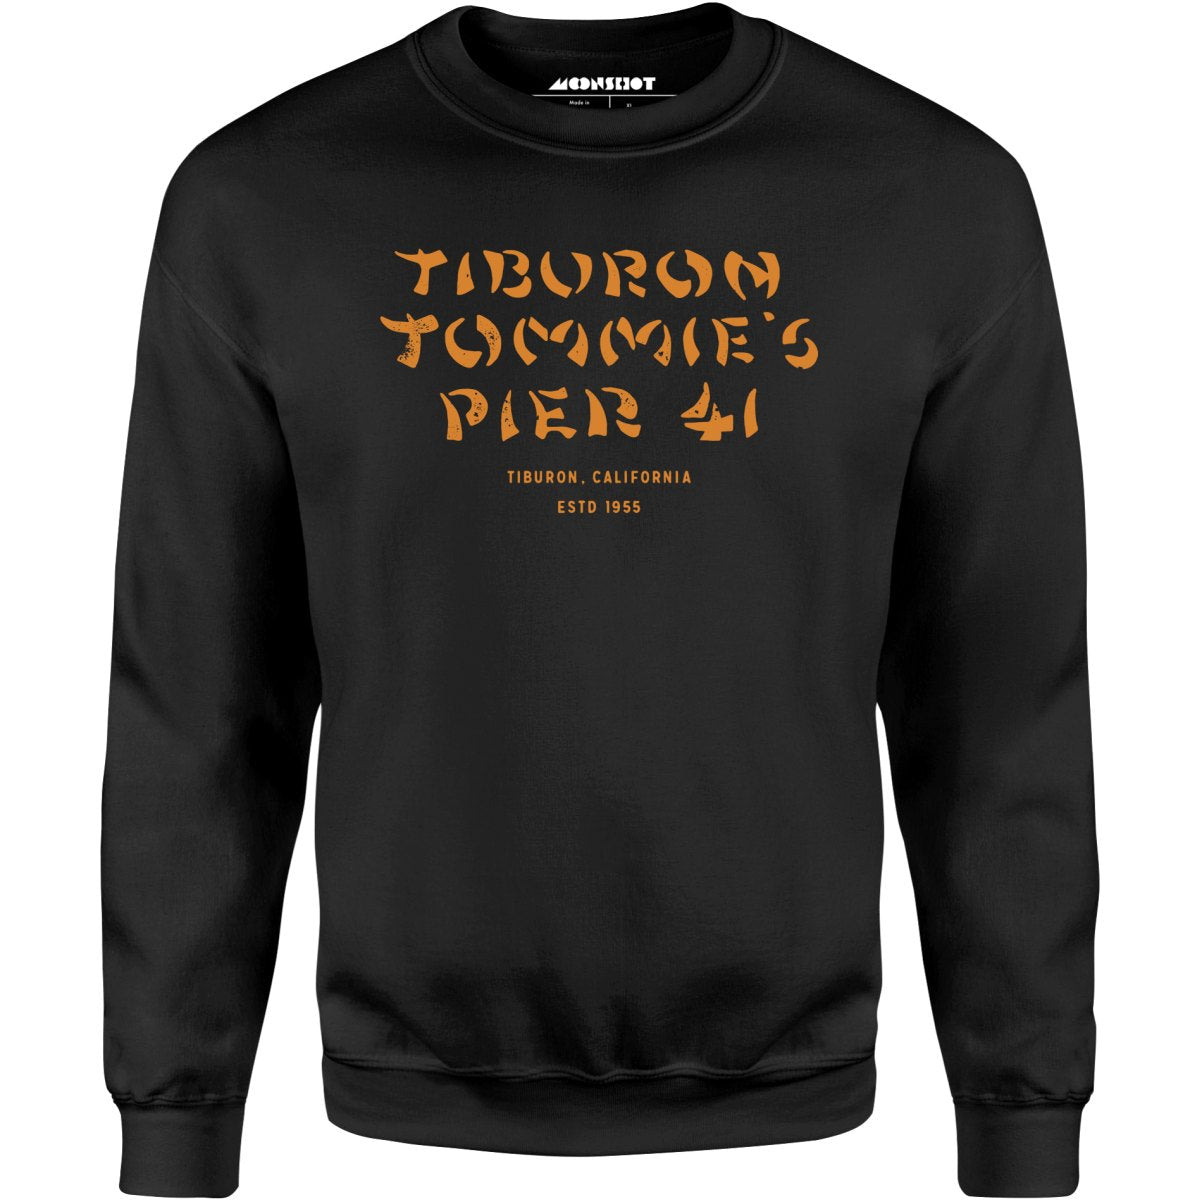 Tiburon Tommie's Pier 41 - Tiburon, CA - Vintage Tiki Bar - Unisex Sweatshirt